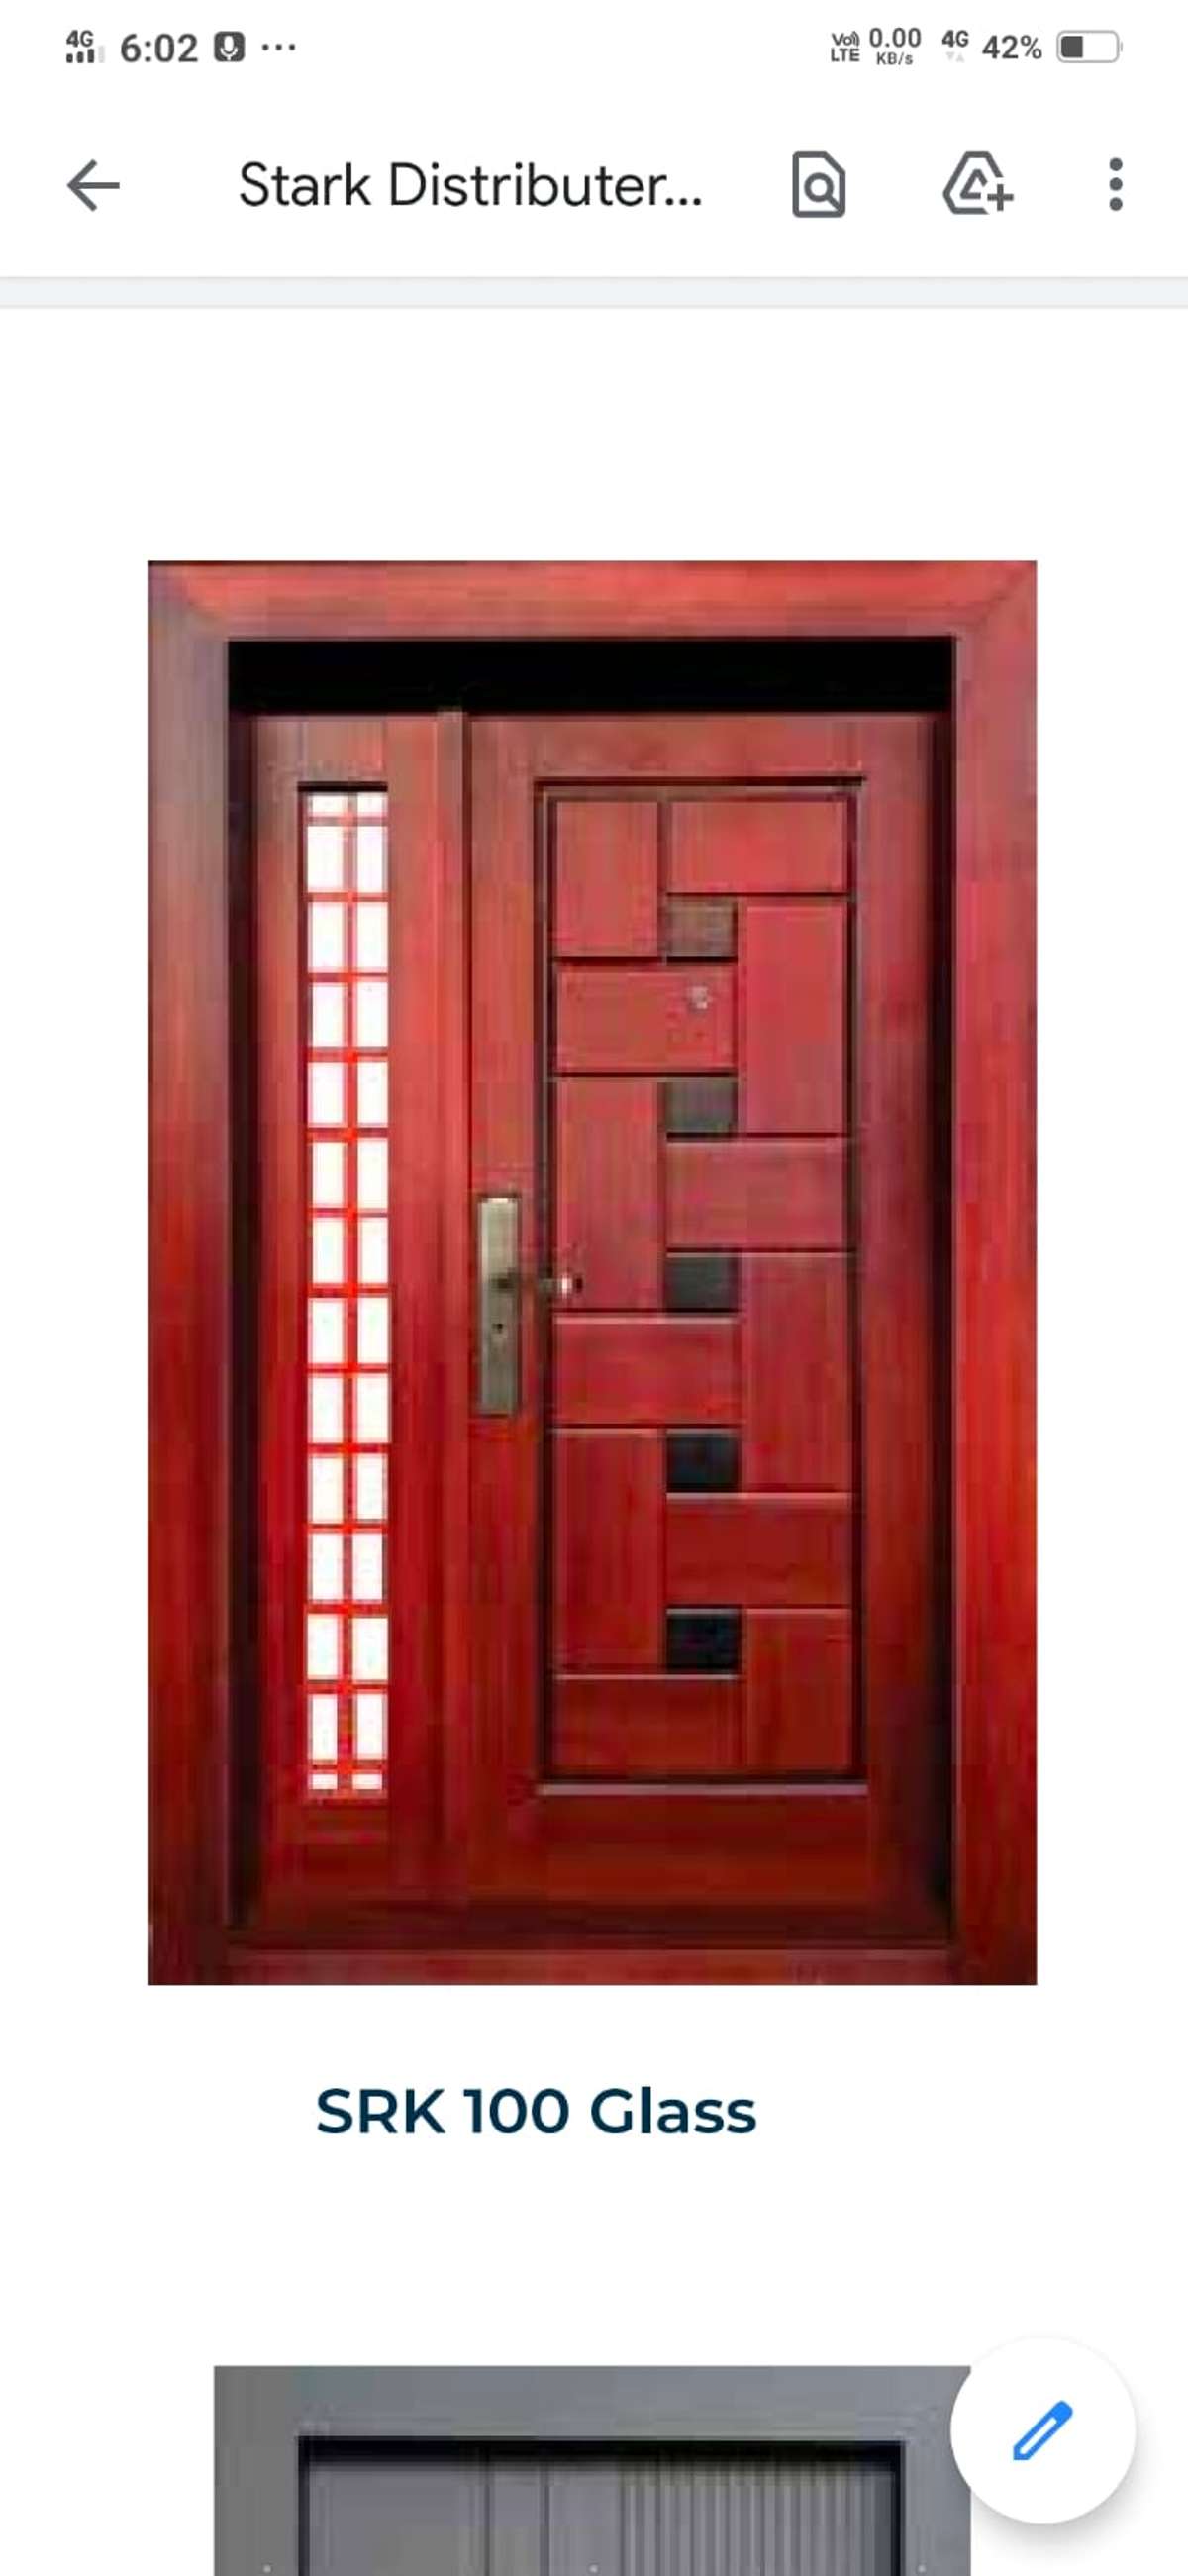 Steel doors and Steel windows PVC and upvc doors fibre doors fabrication work mosquito blind curtain kitchen cupboards